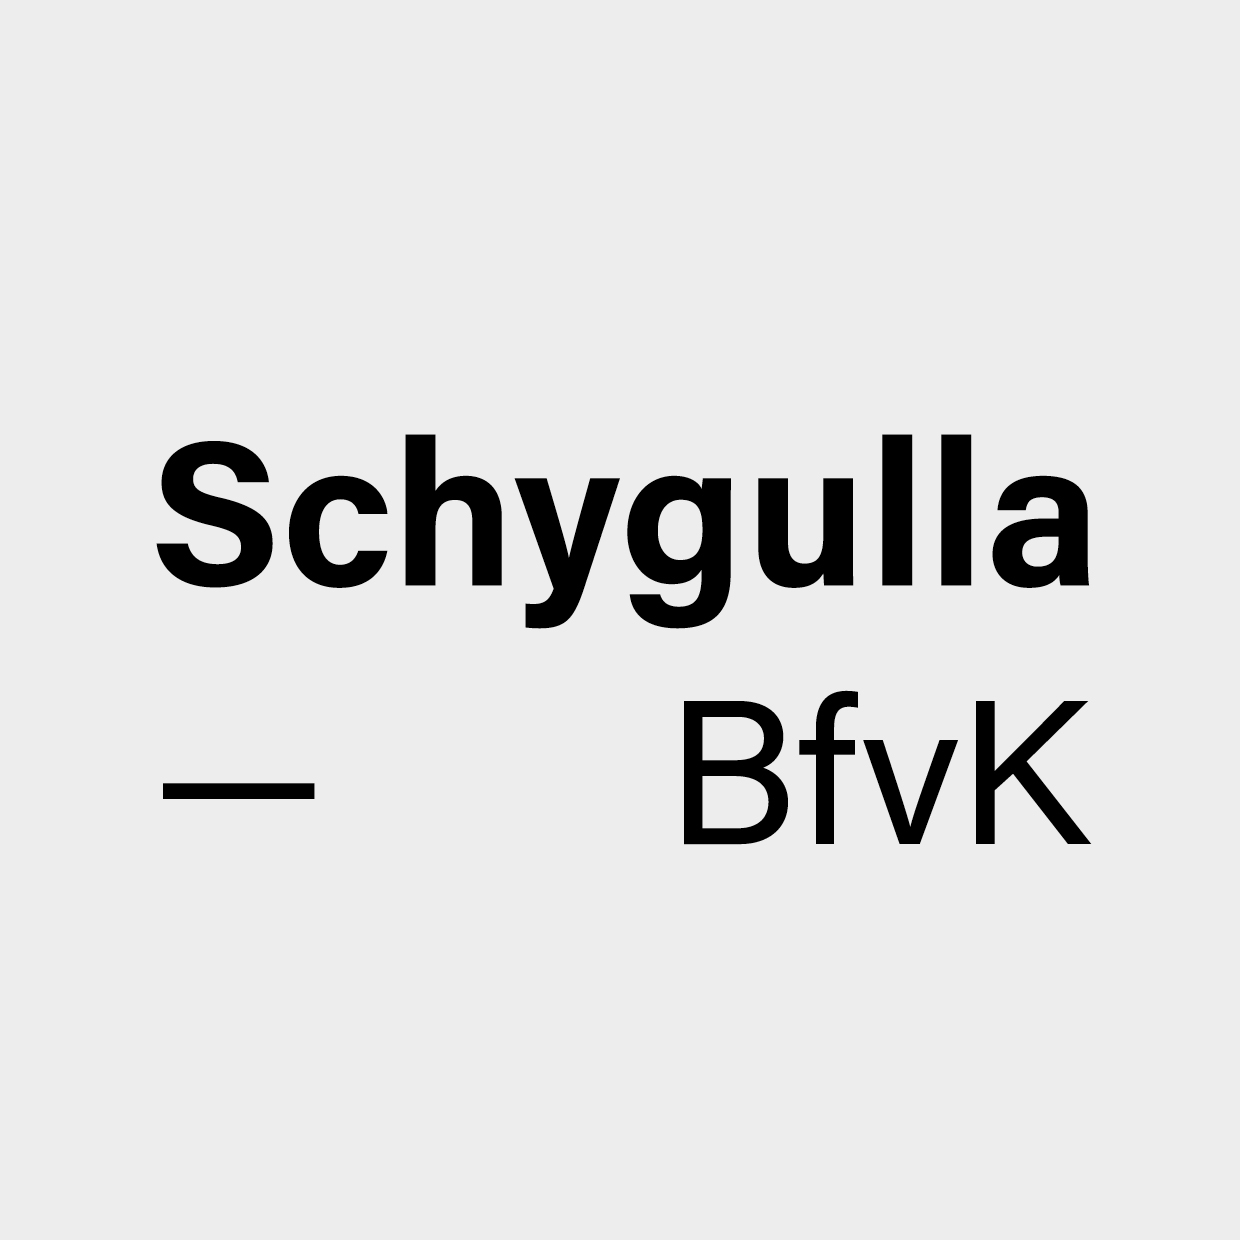 (c) Schygulla-buero.com